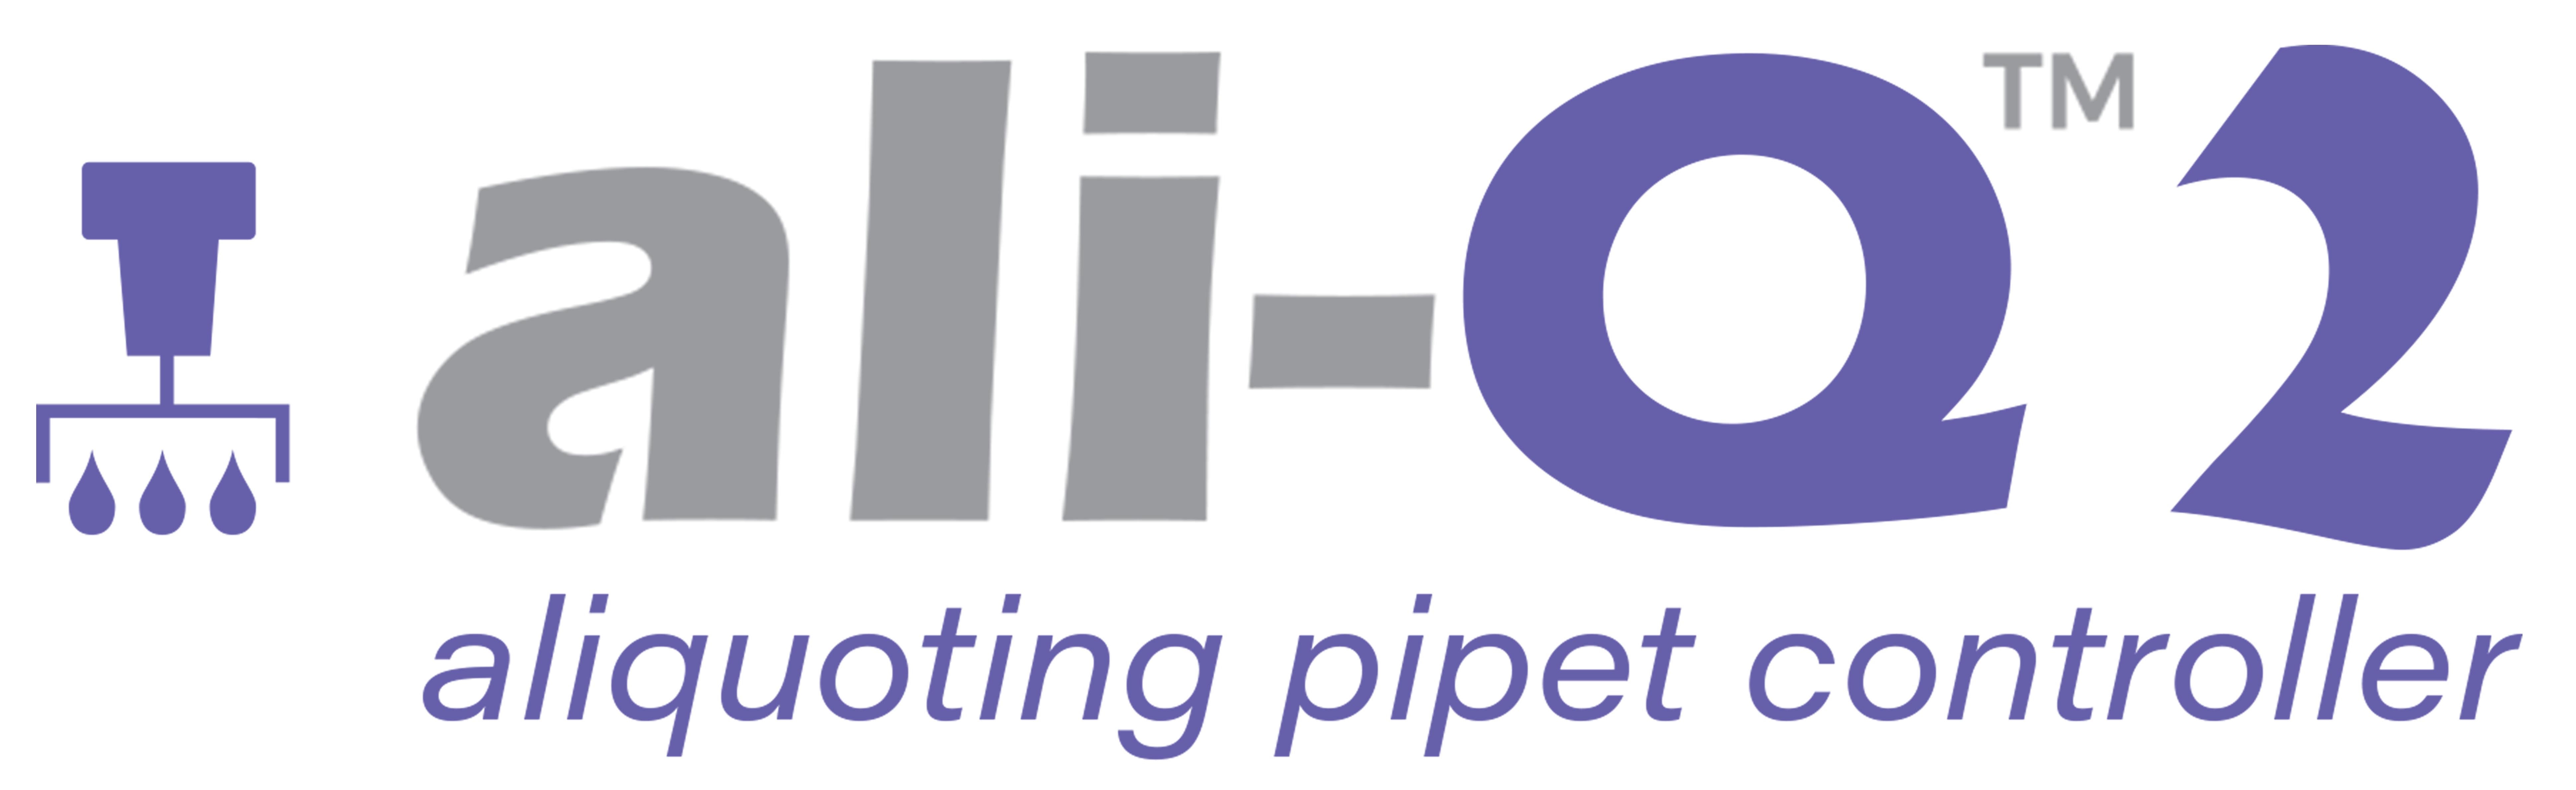 VistaLab Technologies Ali-Q2 Aliquoting Pipet Controller Logo